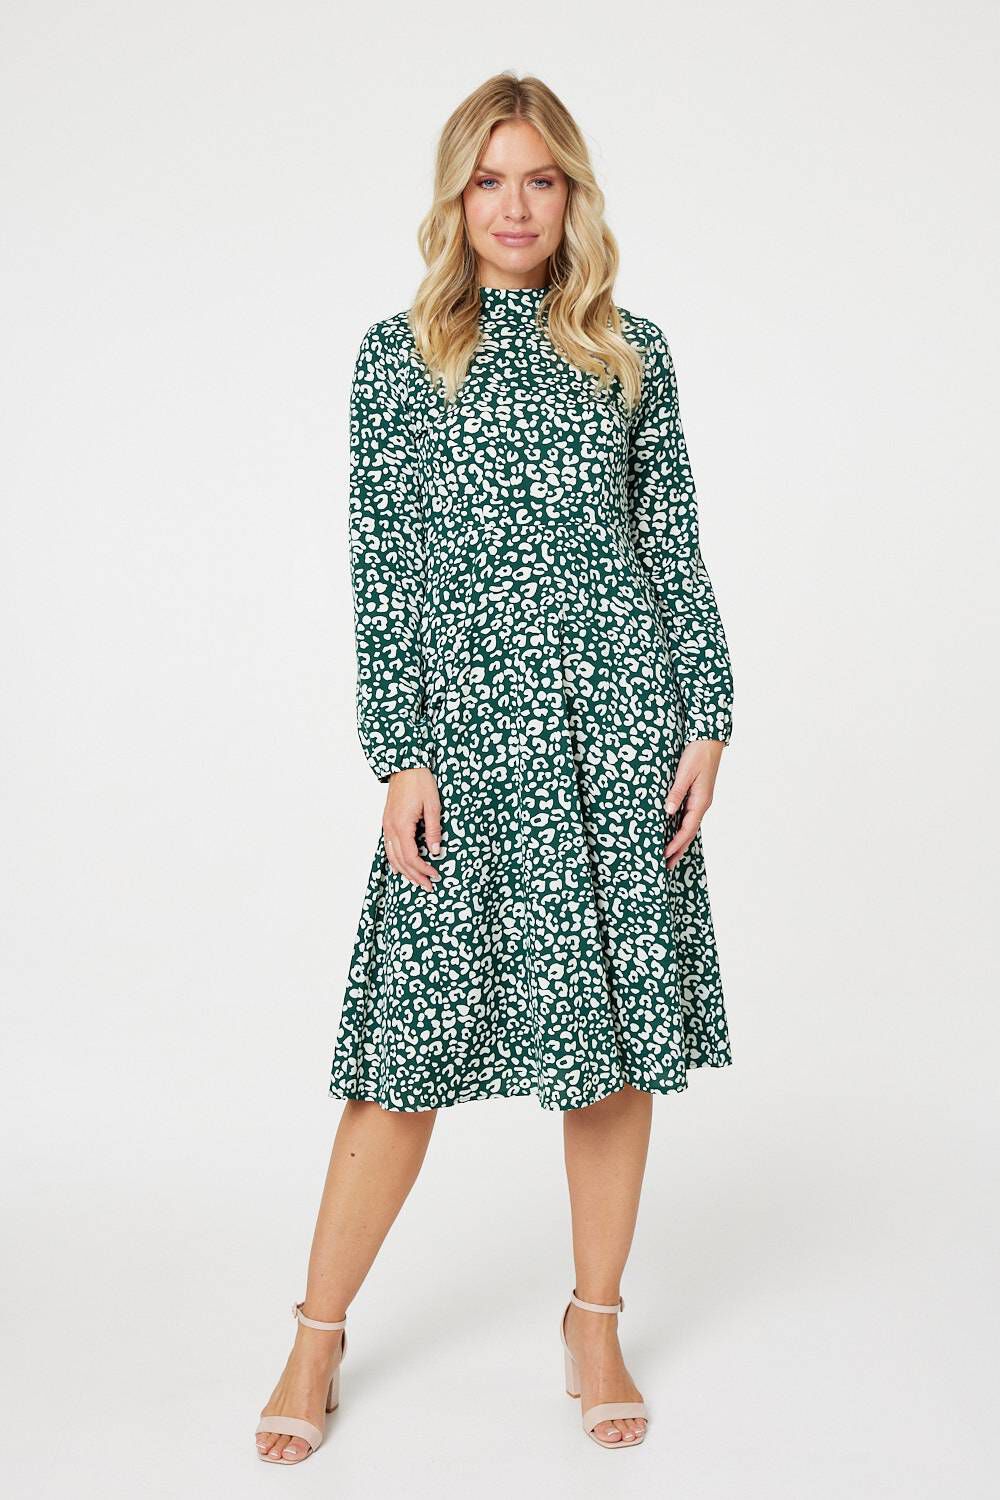 Izabel London Women’s Green Leopard Print Stylish High Neck Tea Dress, Size: 16